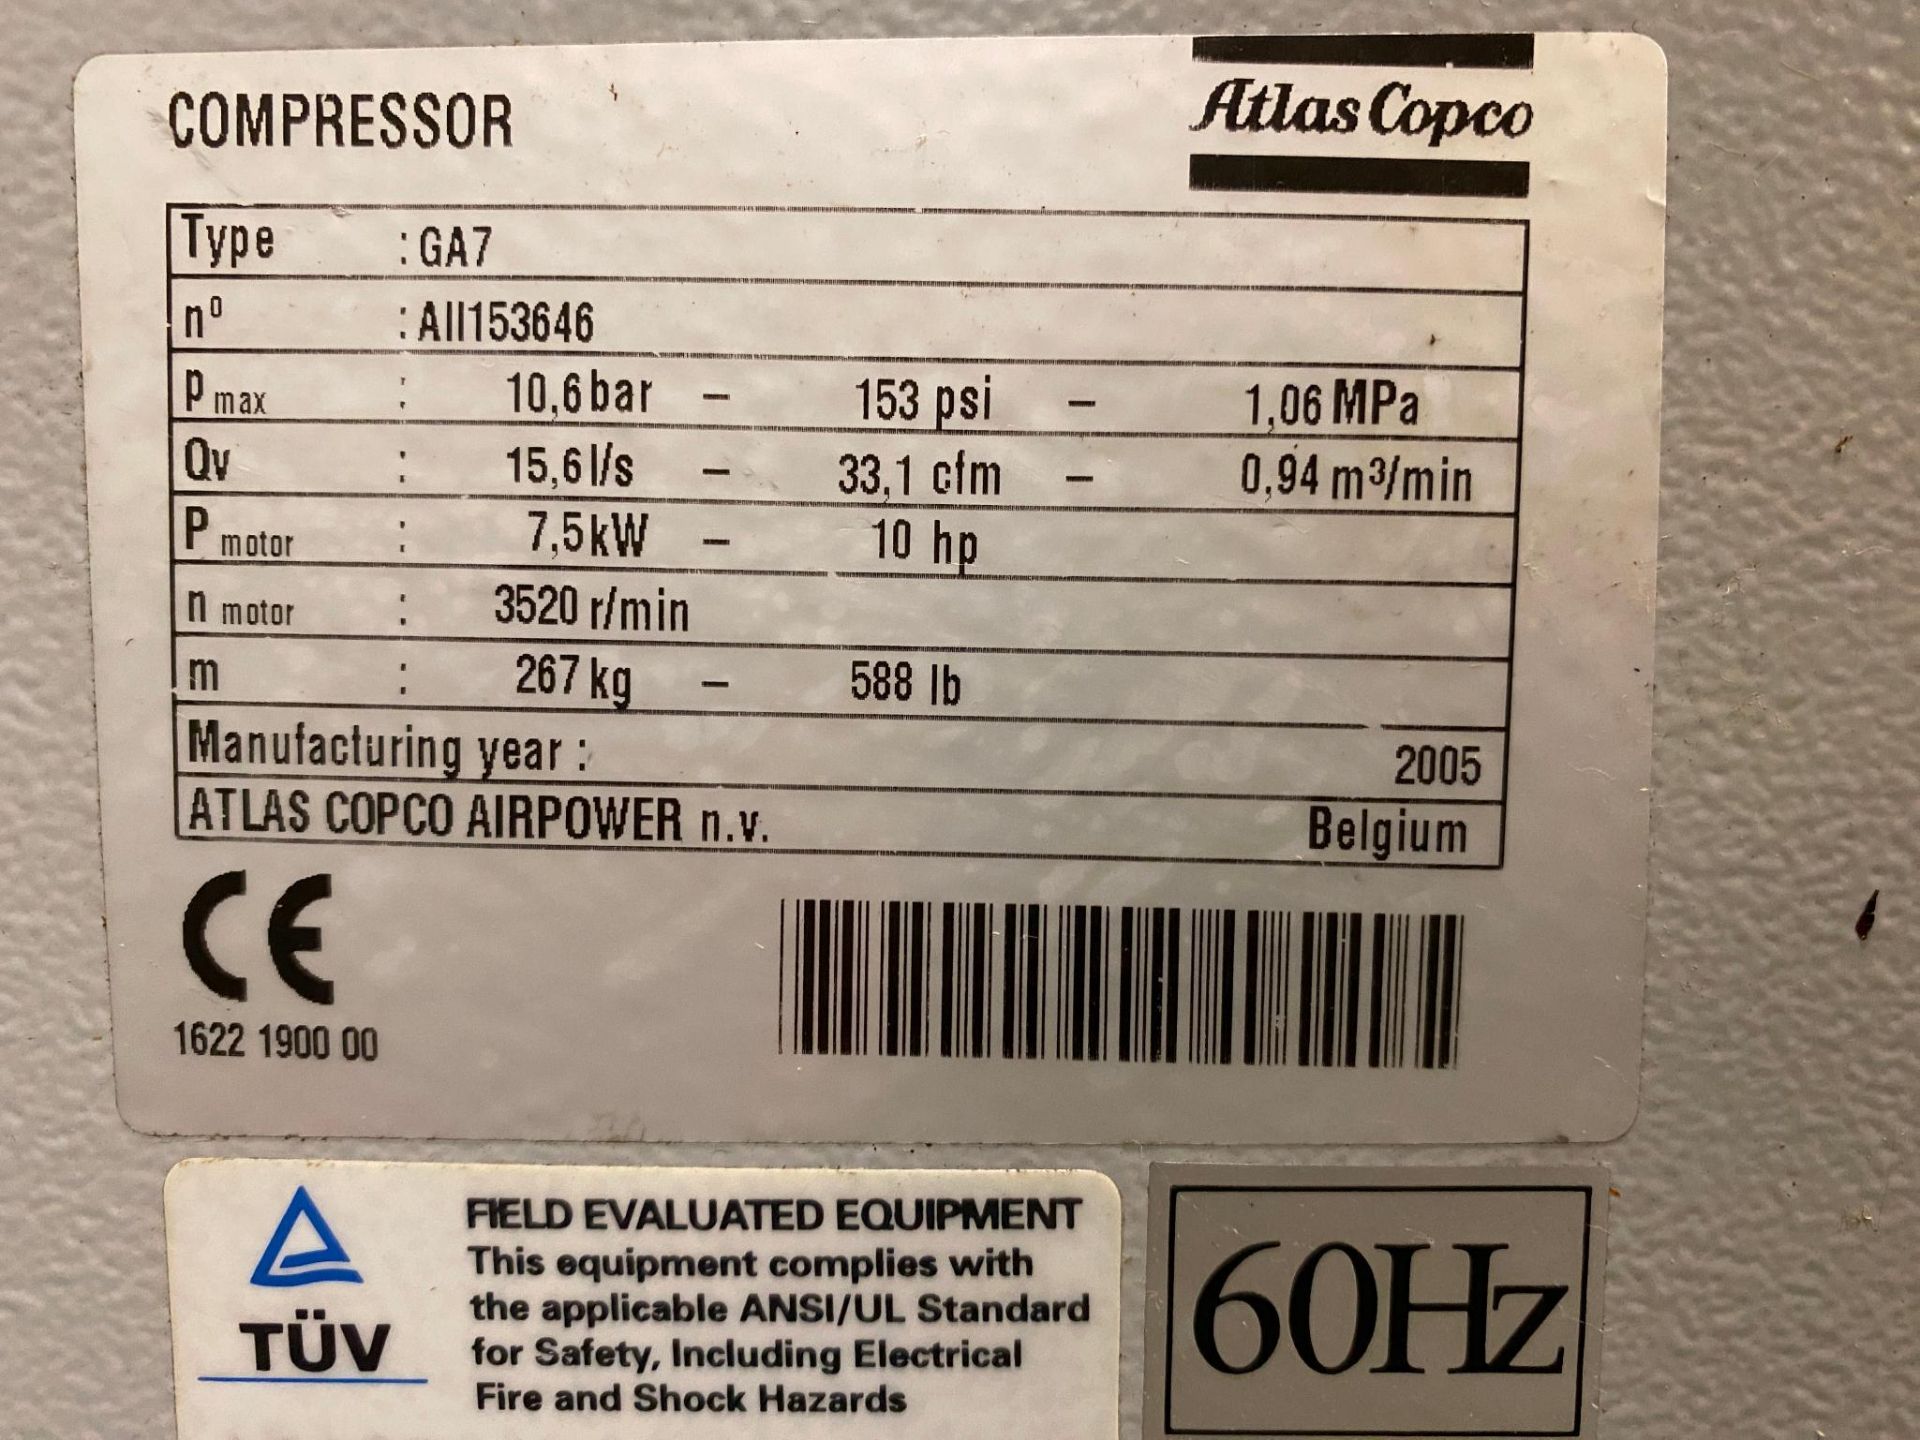 ROTARY SCREW AIR COMPRESSOR, ATLAS COPCO MDL. GA7- FF, new 2005, 10 HP, 153 psi max., 208 v., S/N - Image 4 of 4